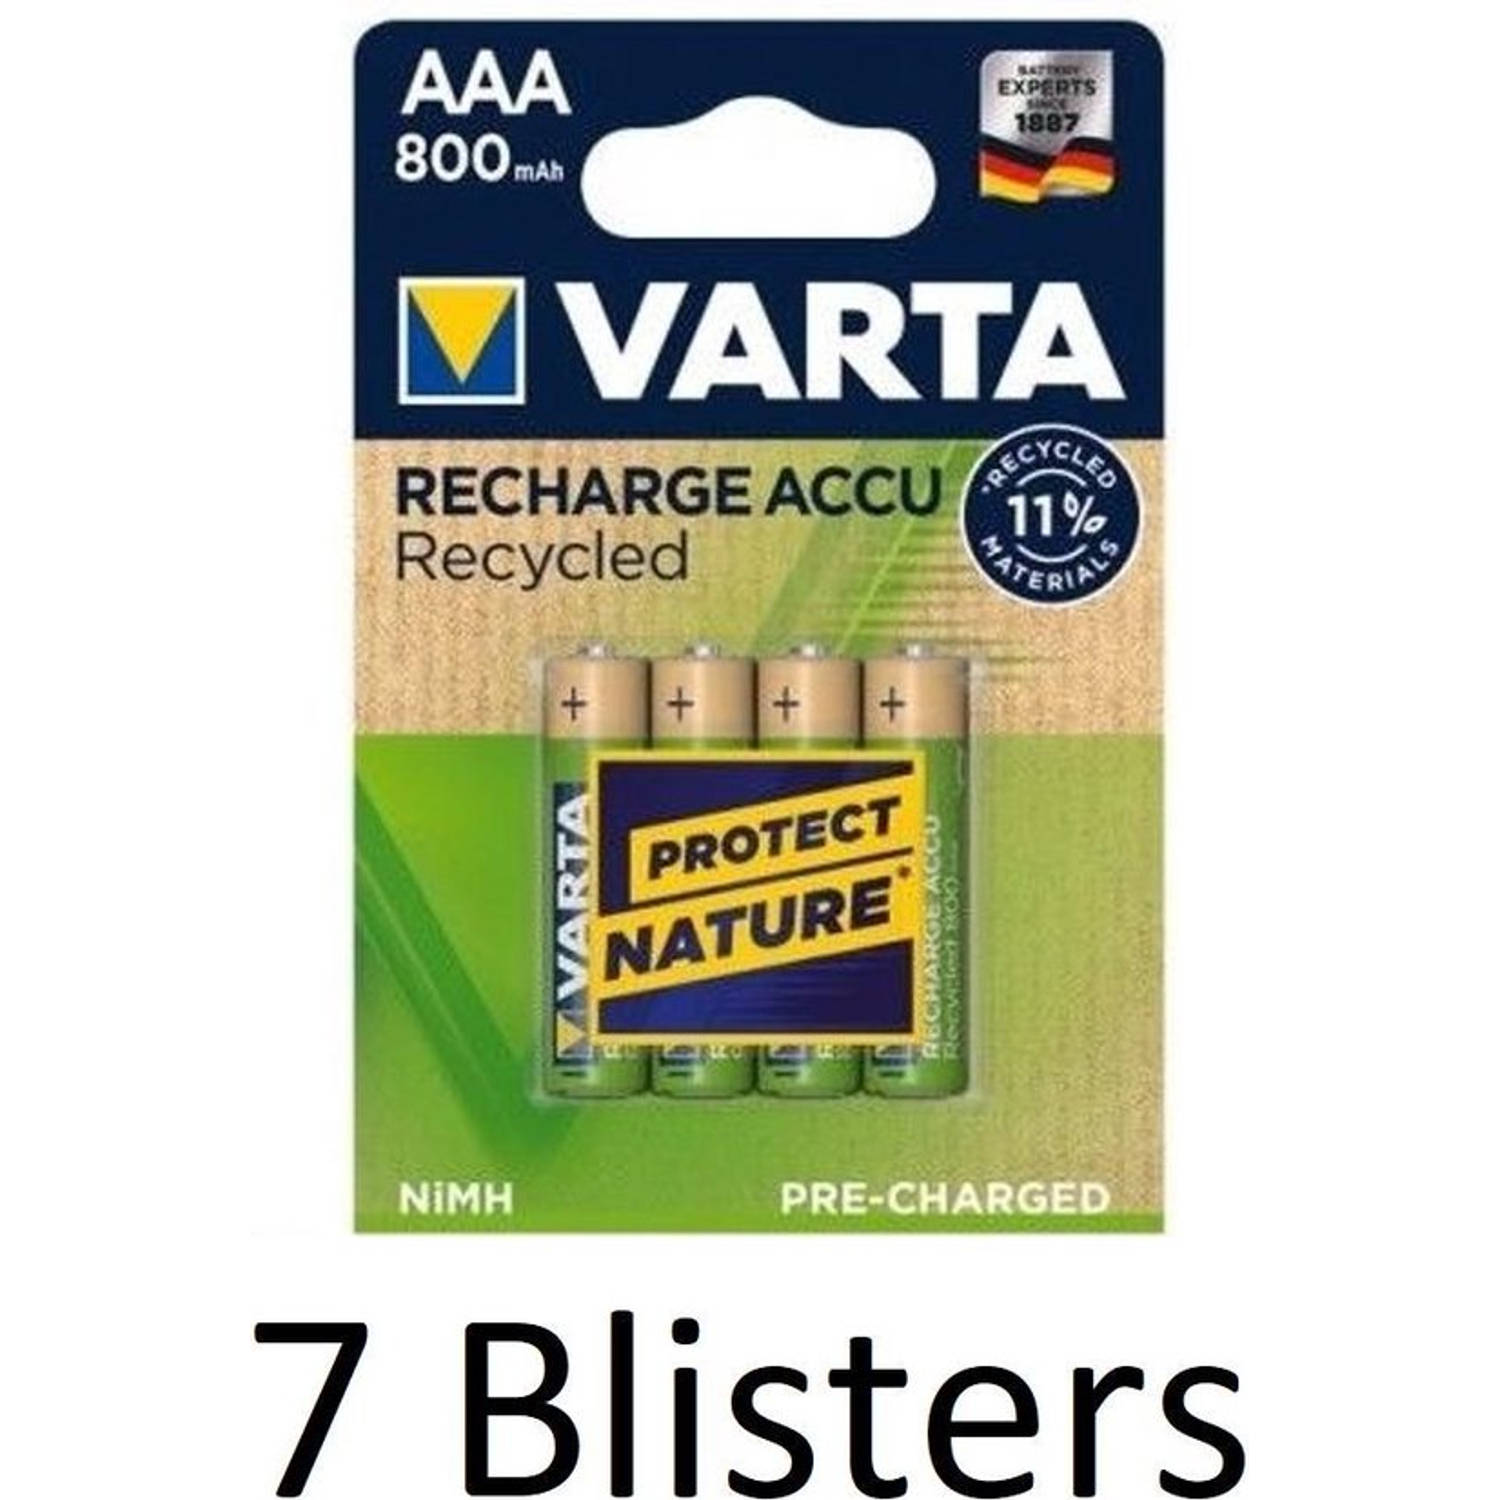 28 Stuks (7 Blisters A 4 St) Varta Recharge Accu Recycled Aaa Oplaadbare Batterijen 800 Mah